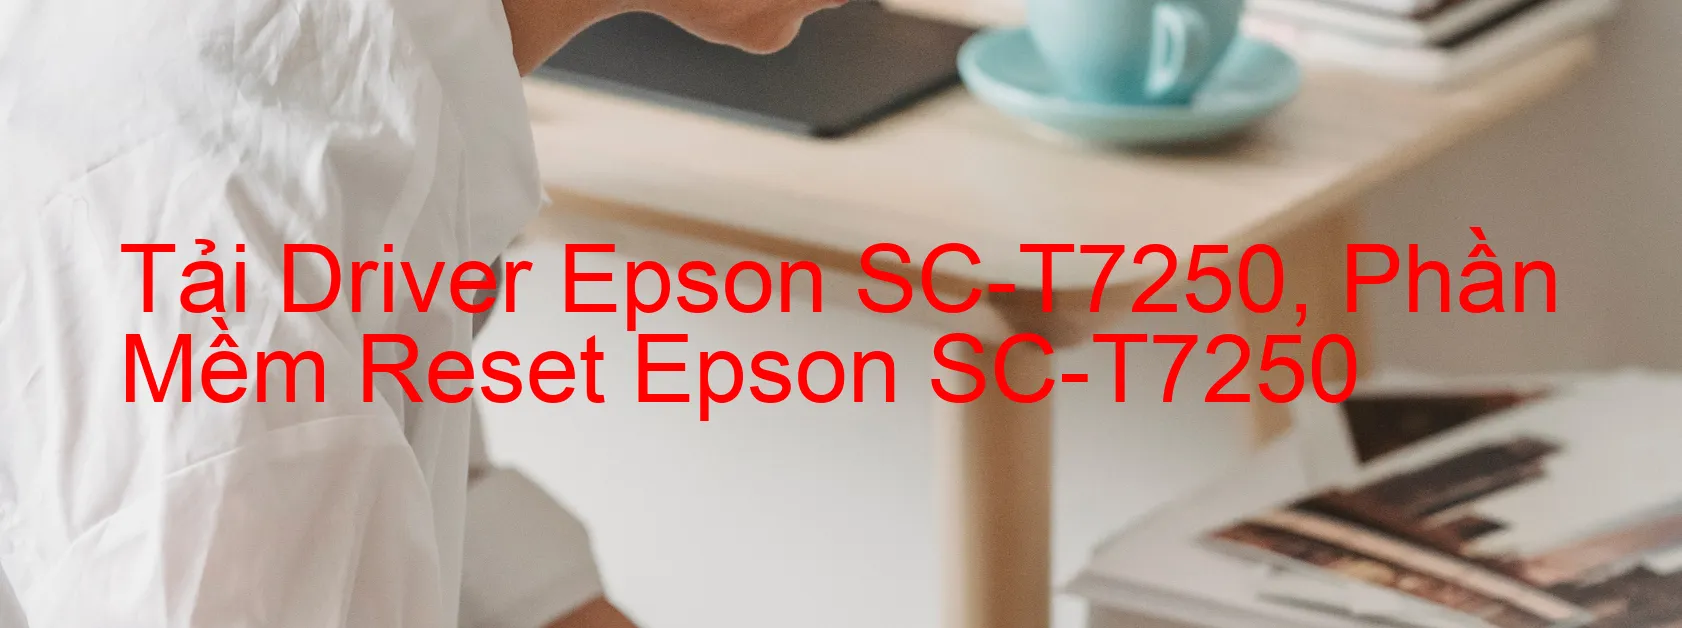 Driver Epson SC-T7250, Phần Mềm Reset Epson SC-T7250